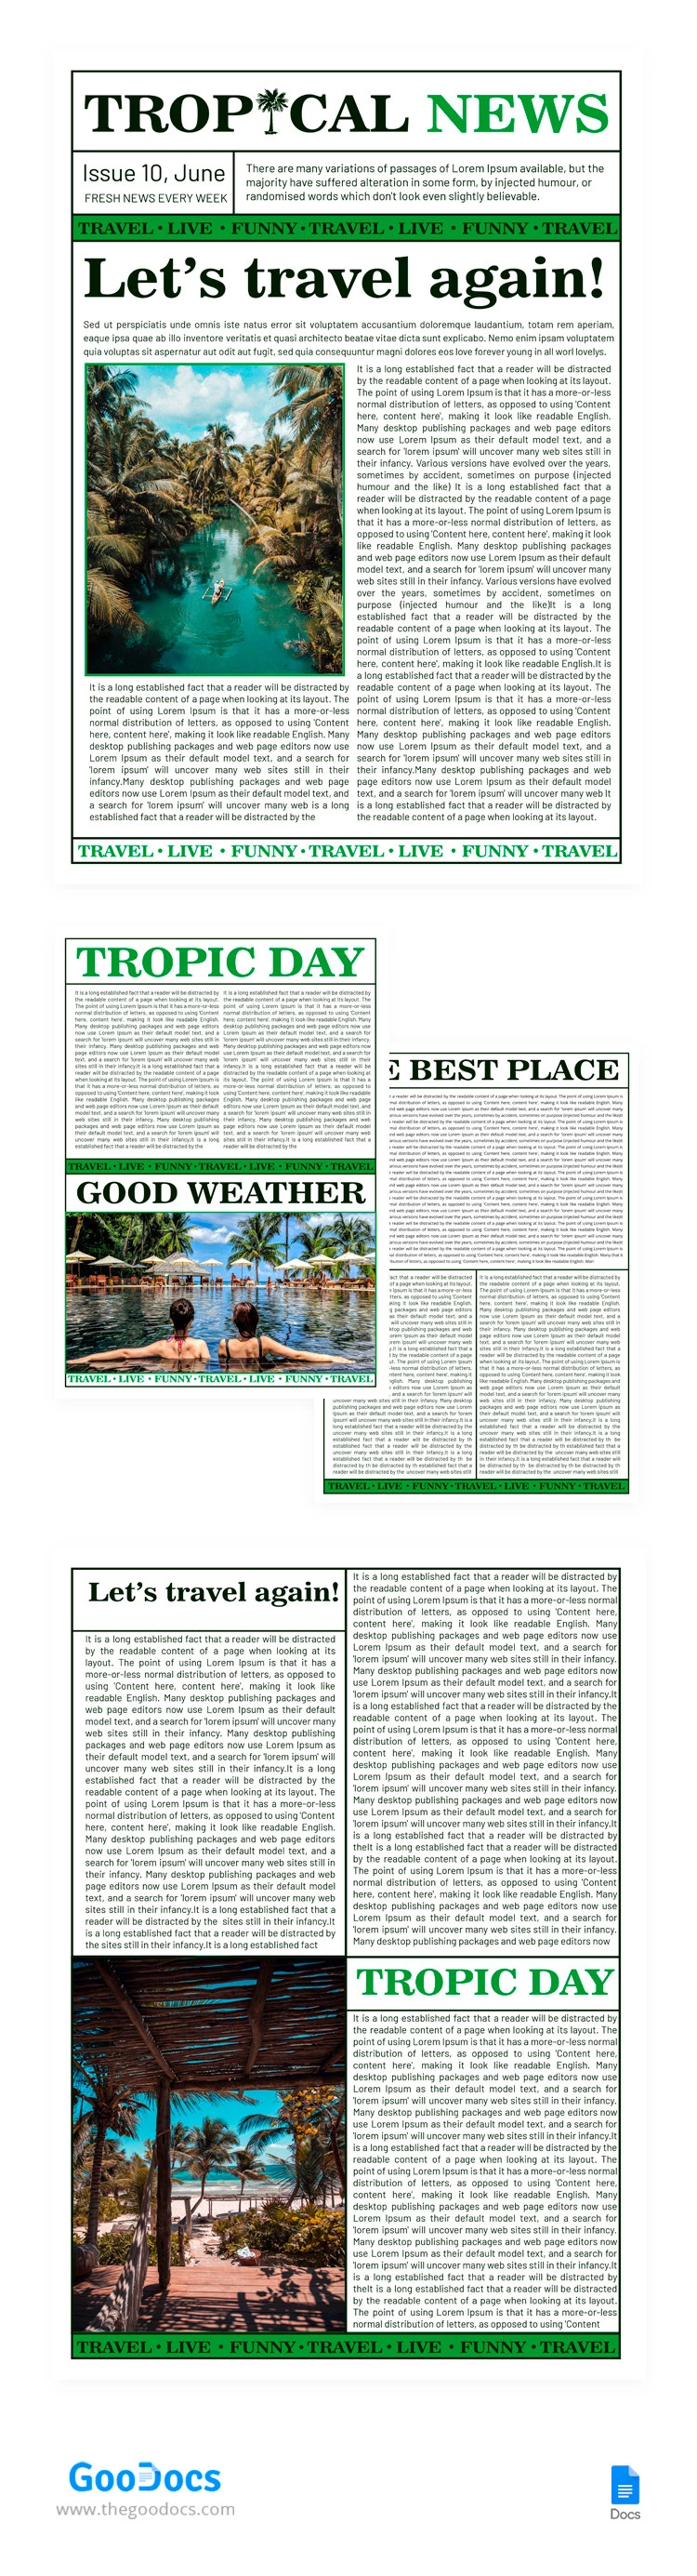 Periódico tropical - free Google Docs Template - 10065441